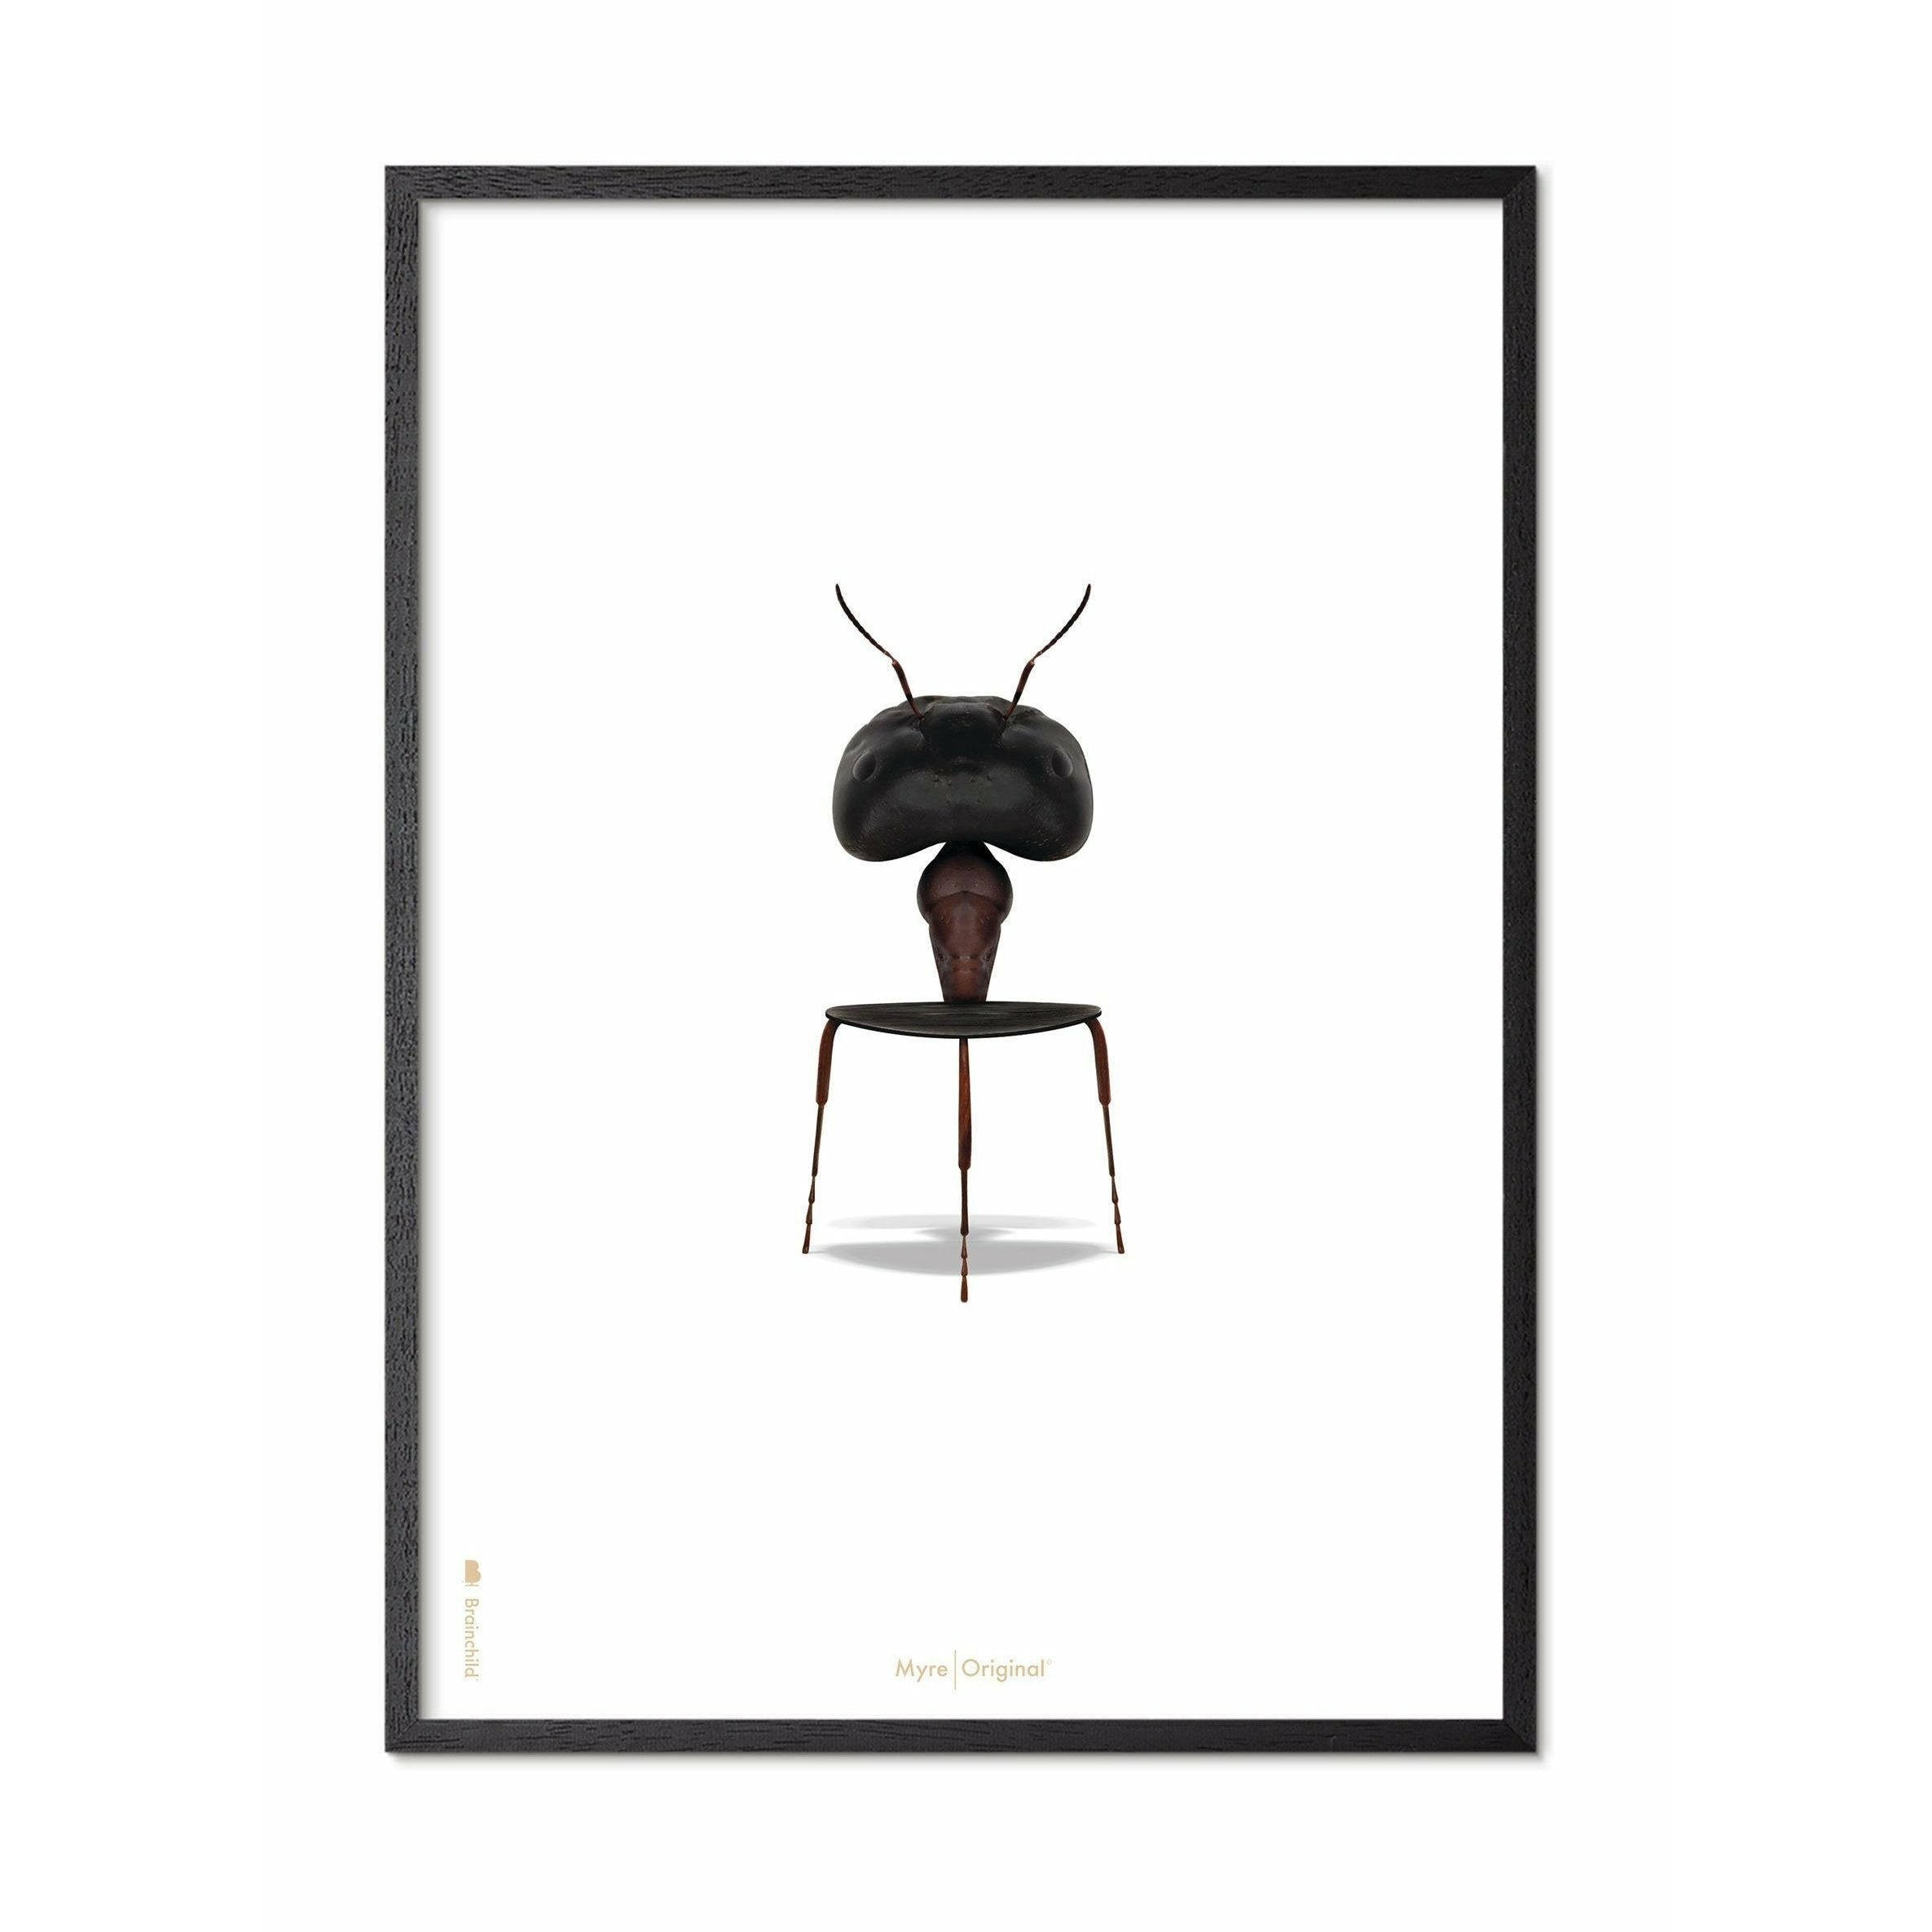 Póster clásico de hormigas de creación, marco en madera lacada negra A5, fondo blanco